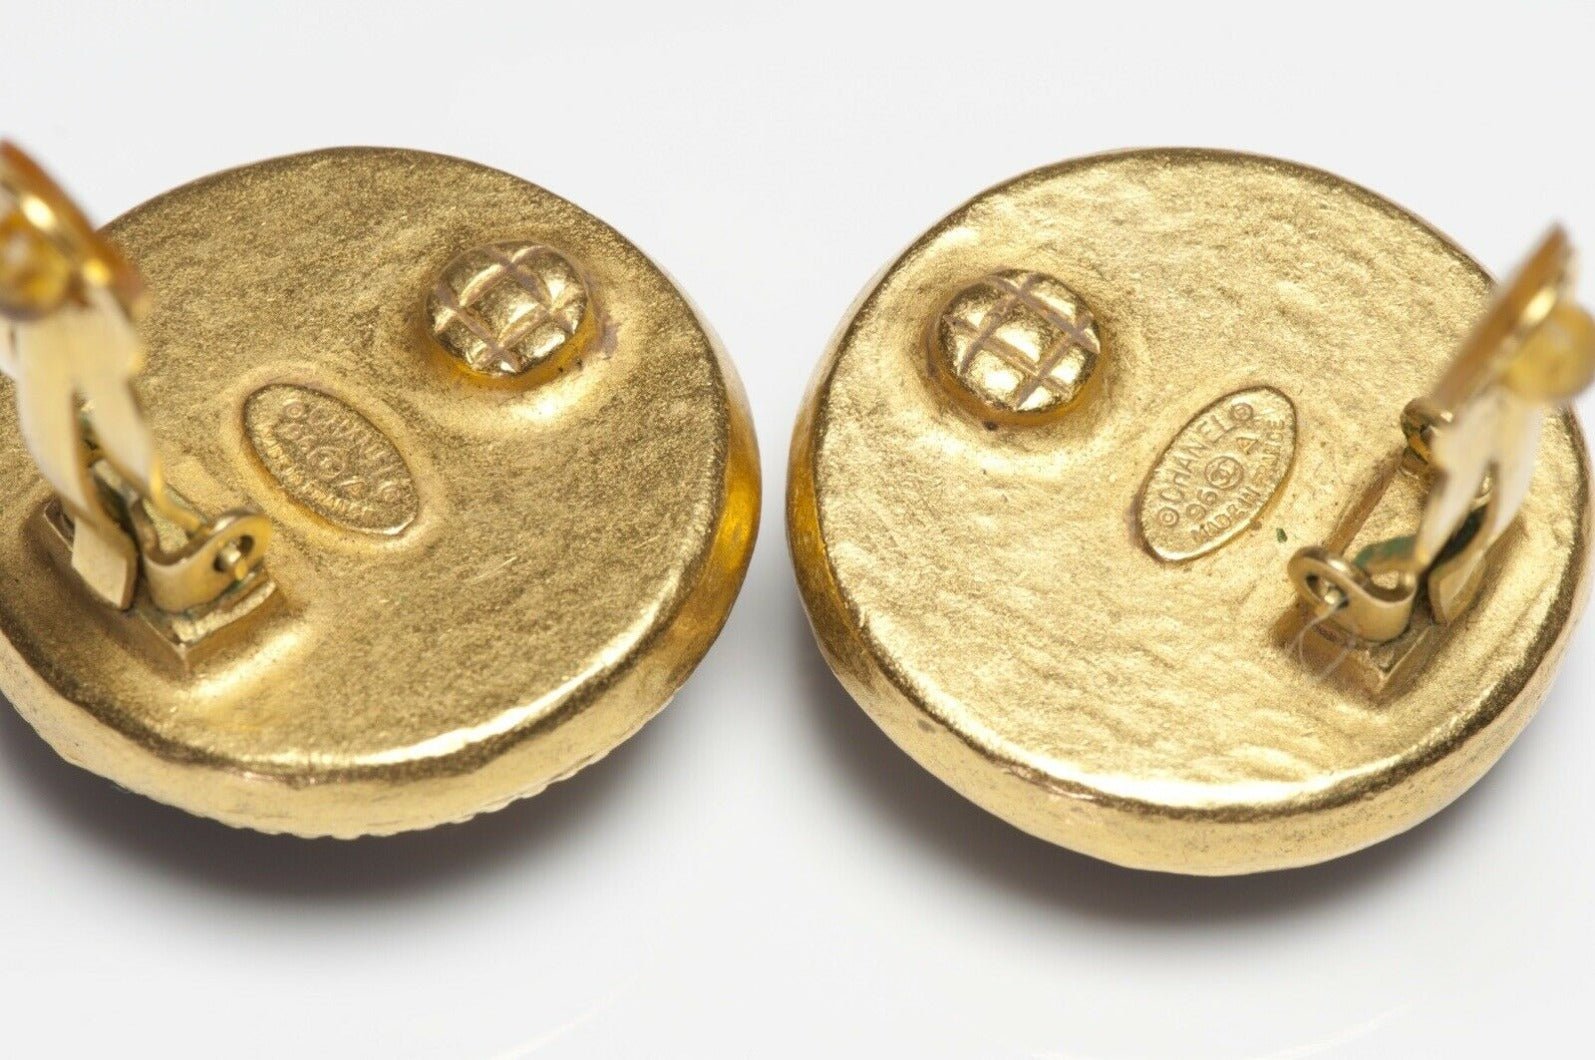 CHANEL Paris Fall 1996 CC Gold Plated Black Enamel Round Earrings